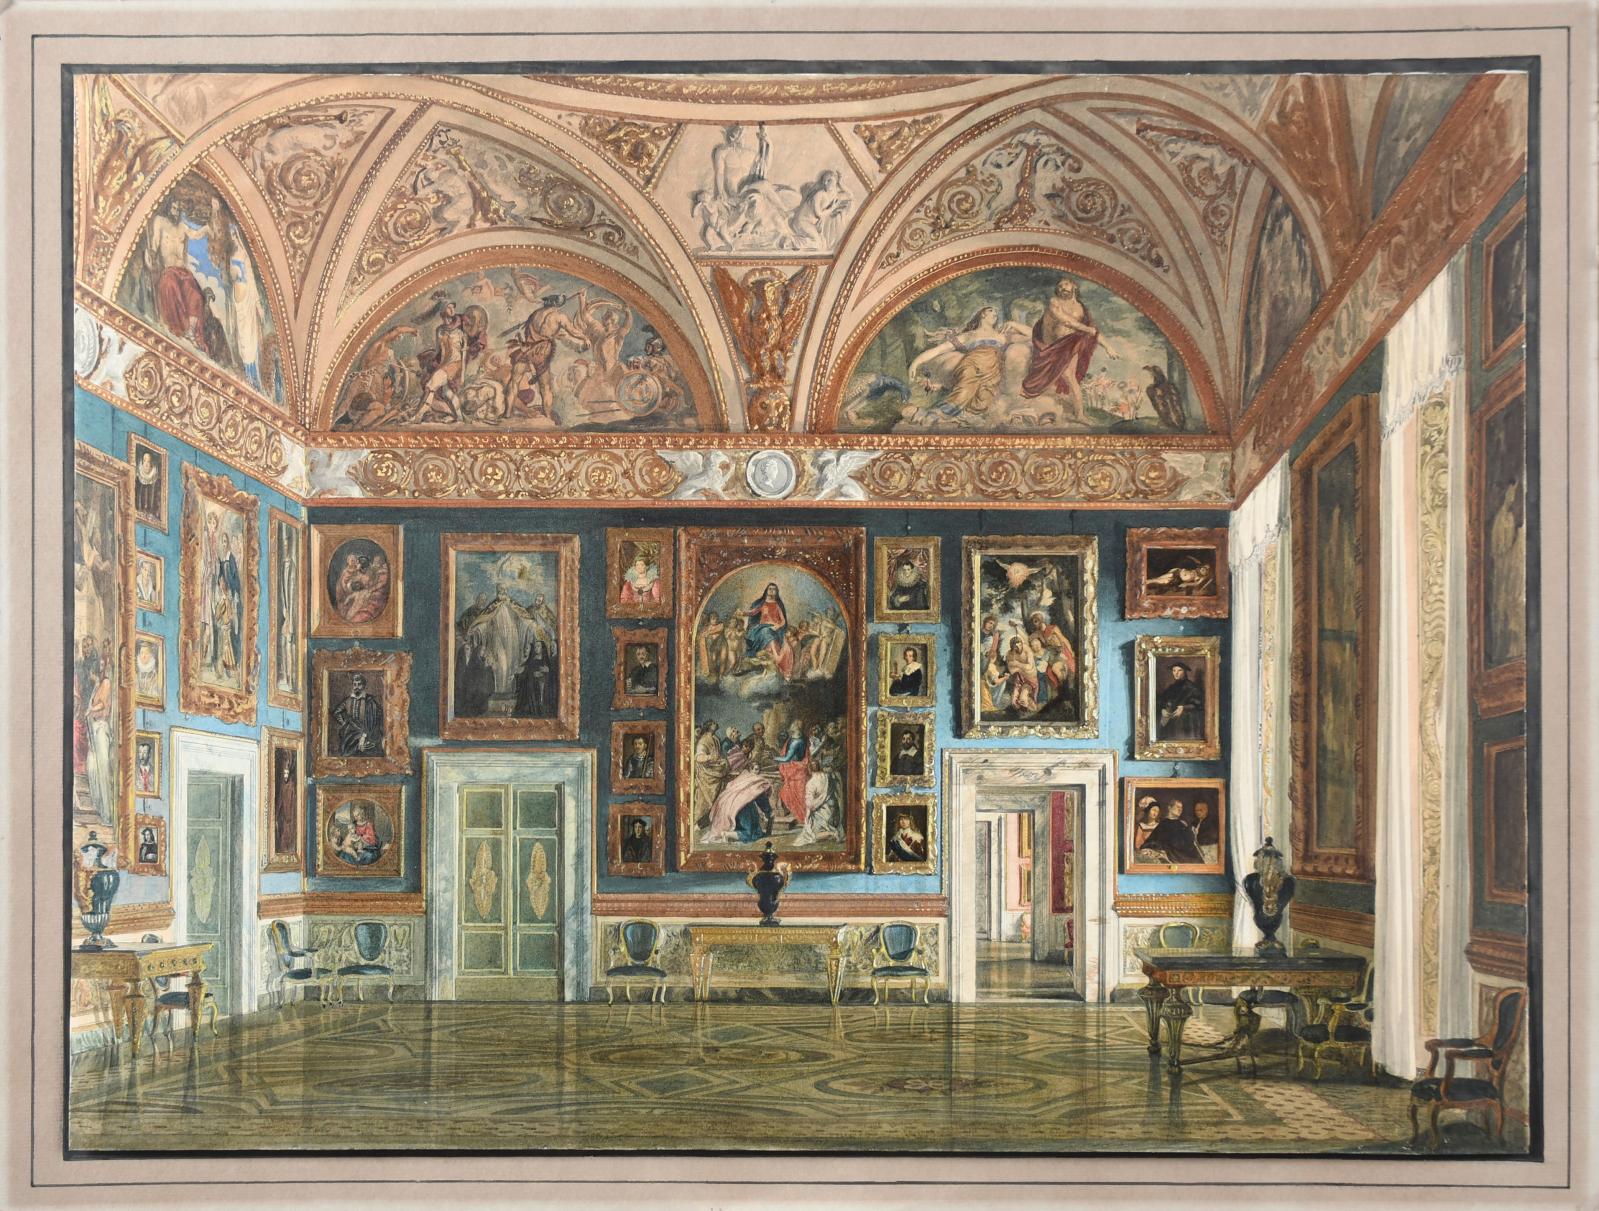 Le palais Pitti